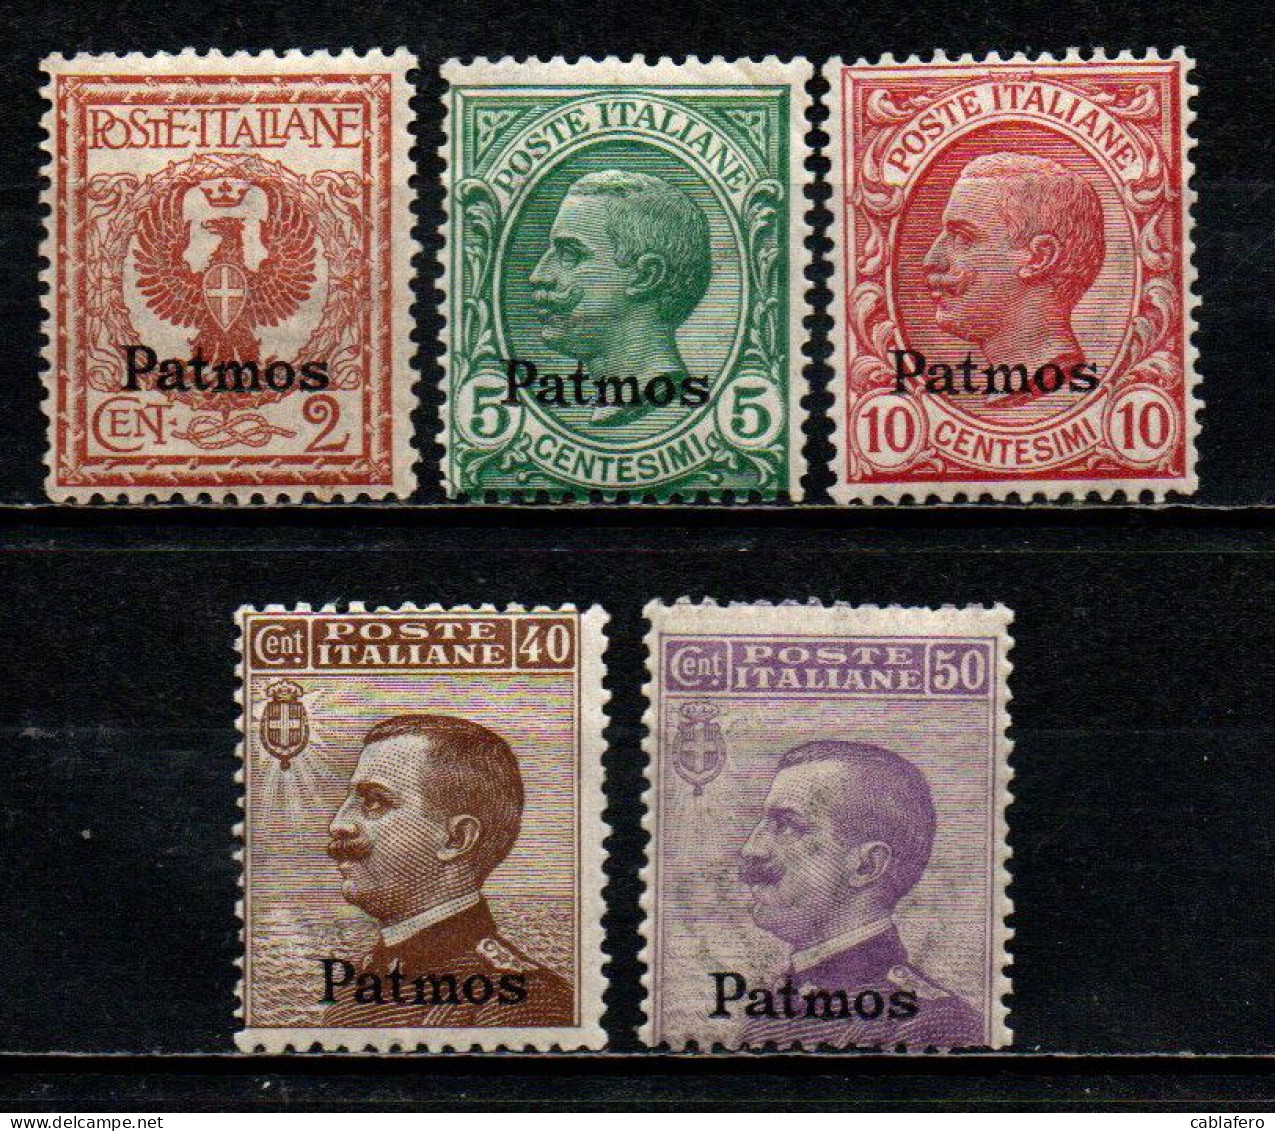 COLONIE ITALIANE - PATMO - 1912 - EFFIGIE DEL RE VITTORIO EMANUELE III - MNH - Egée (Patmo)